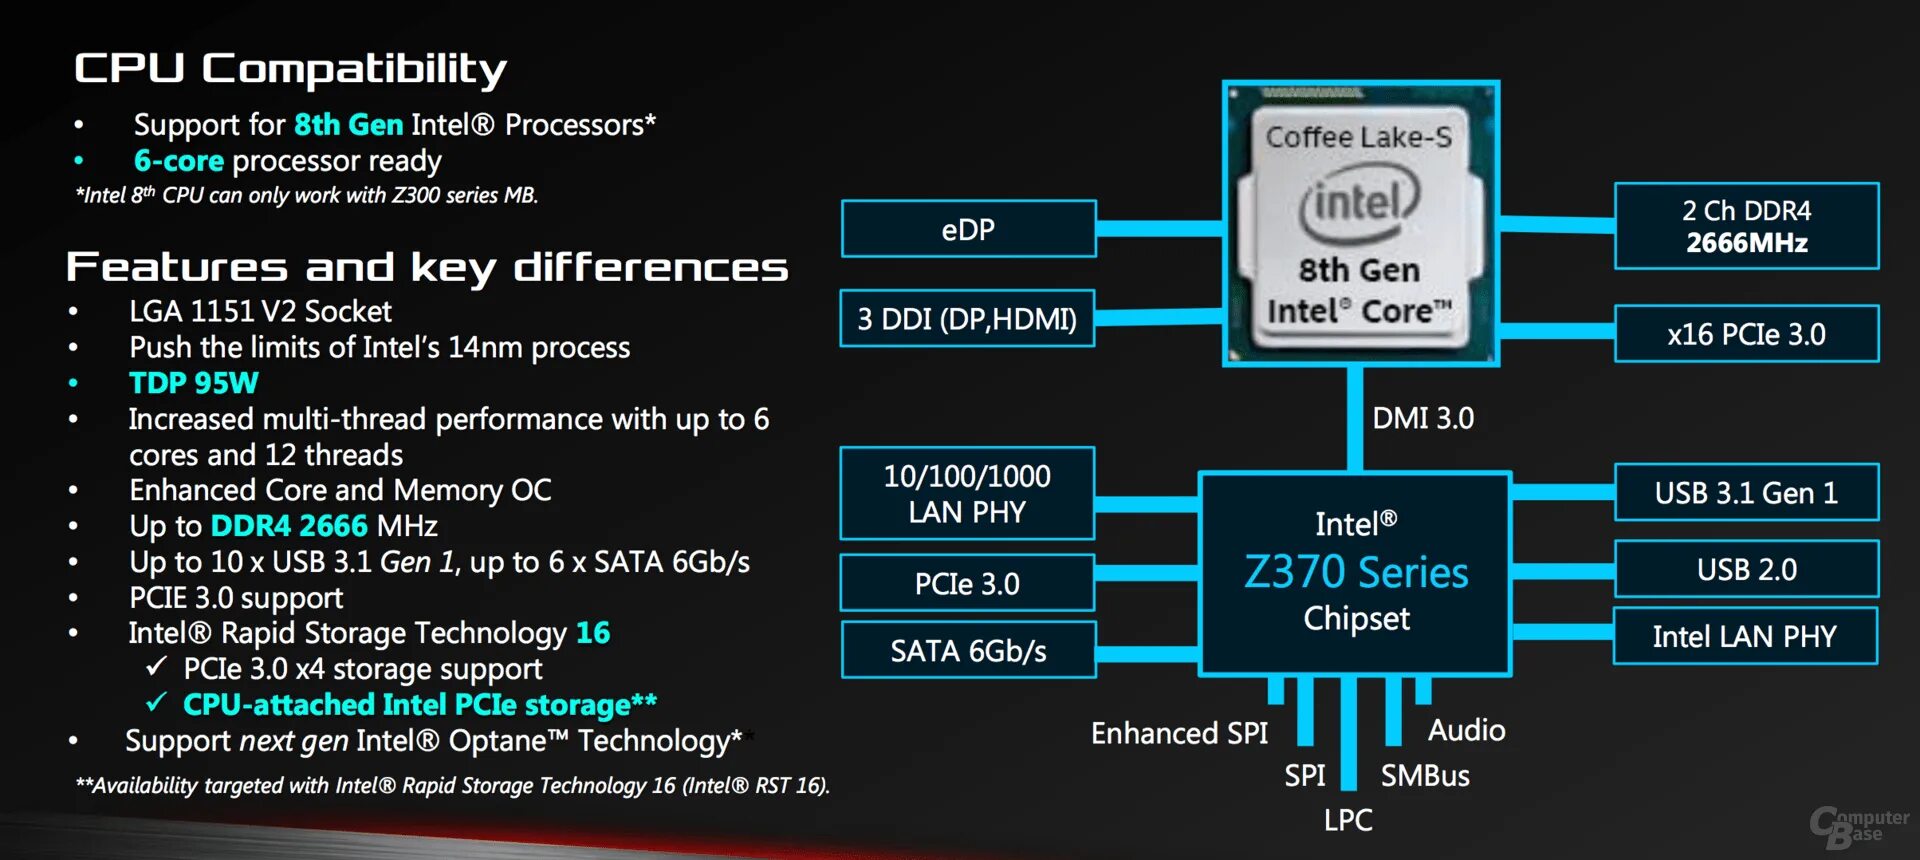 Intel r 4 series chipset. Intel Coffee Lake-s IMC. Архитектура Intel i7 8700. Intel DMI 4.0. Processor 8th Gen Intel.